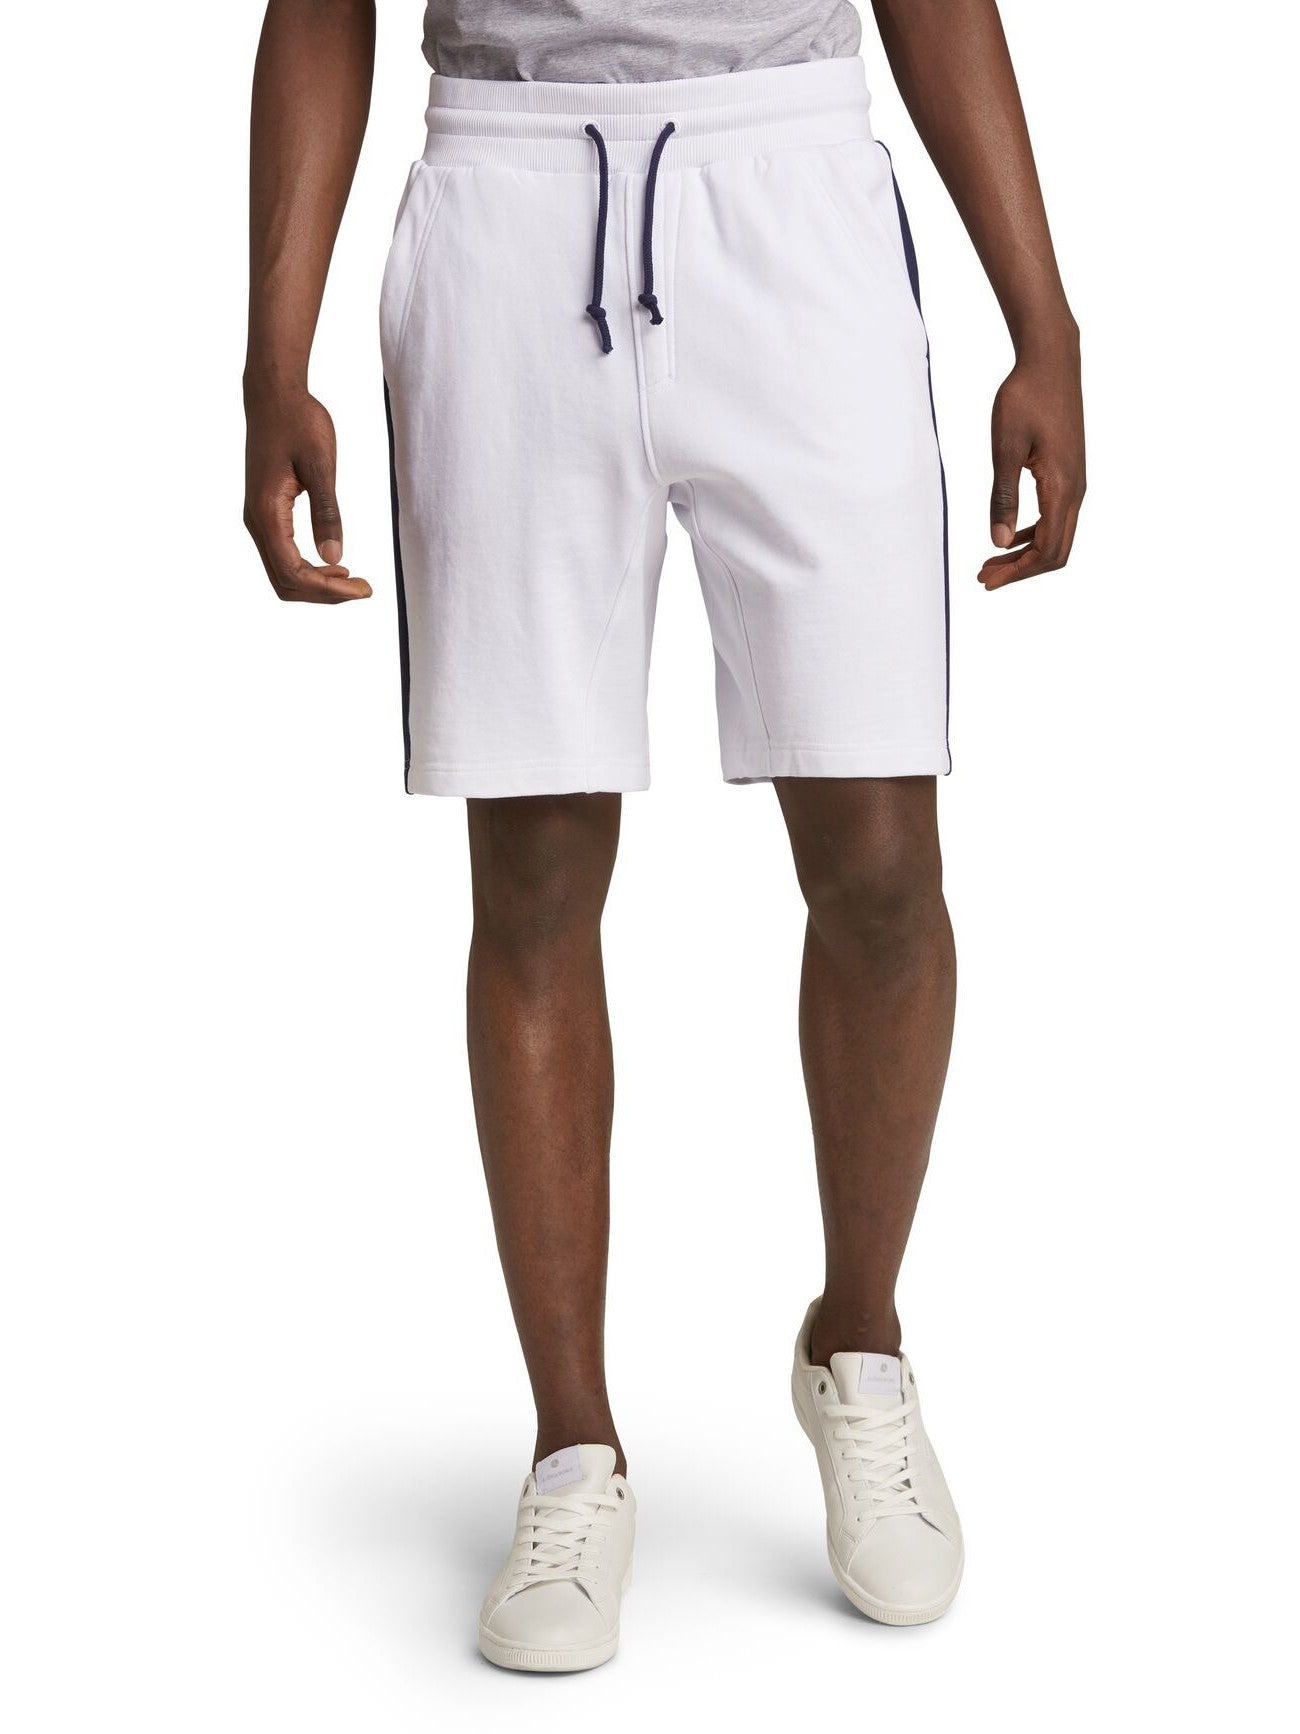 BJORN BORG  Eddy Long Shorts Men's Cross-Training Cotton Shorts White - Activemen Clothing